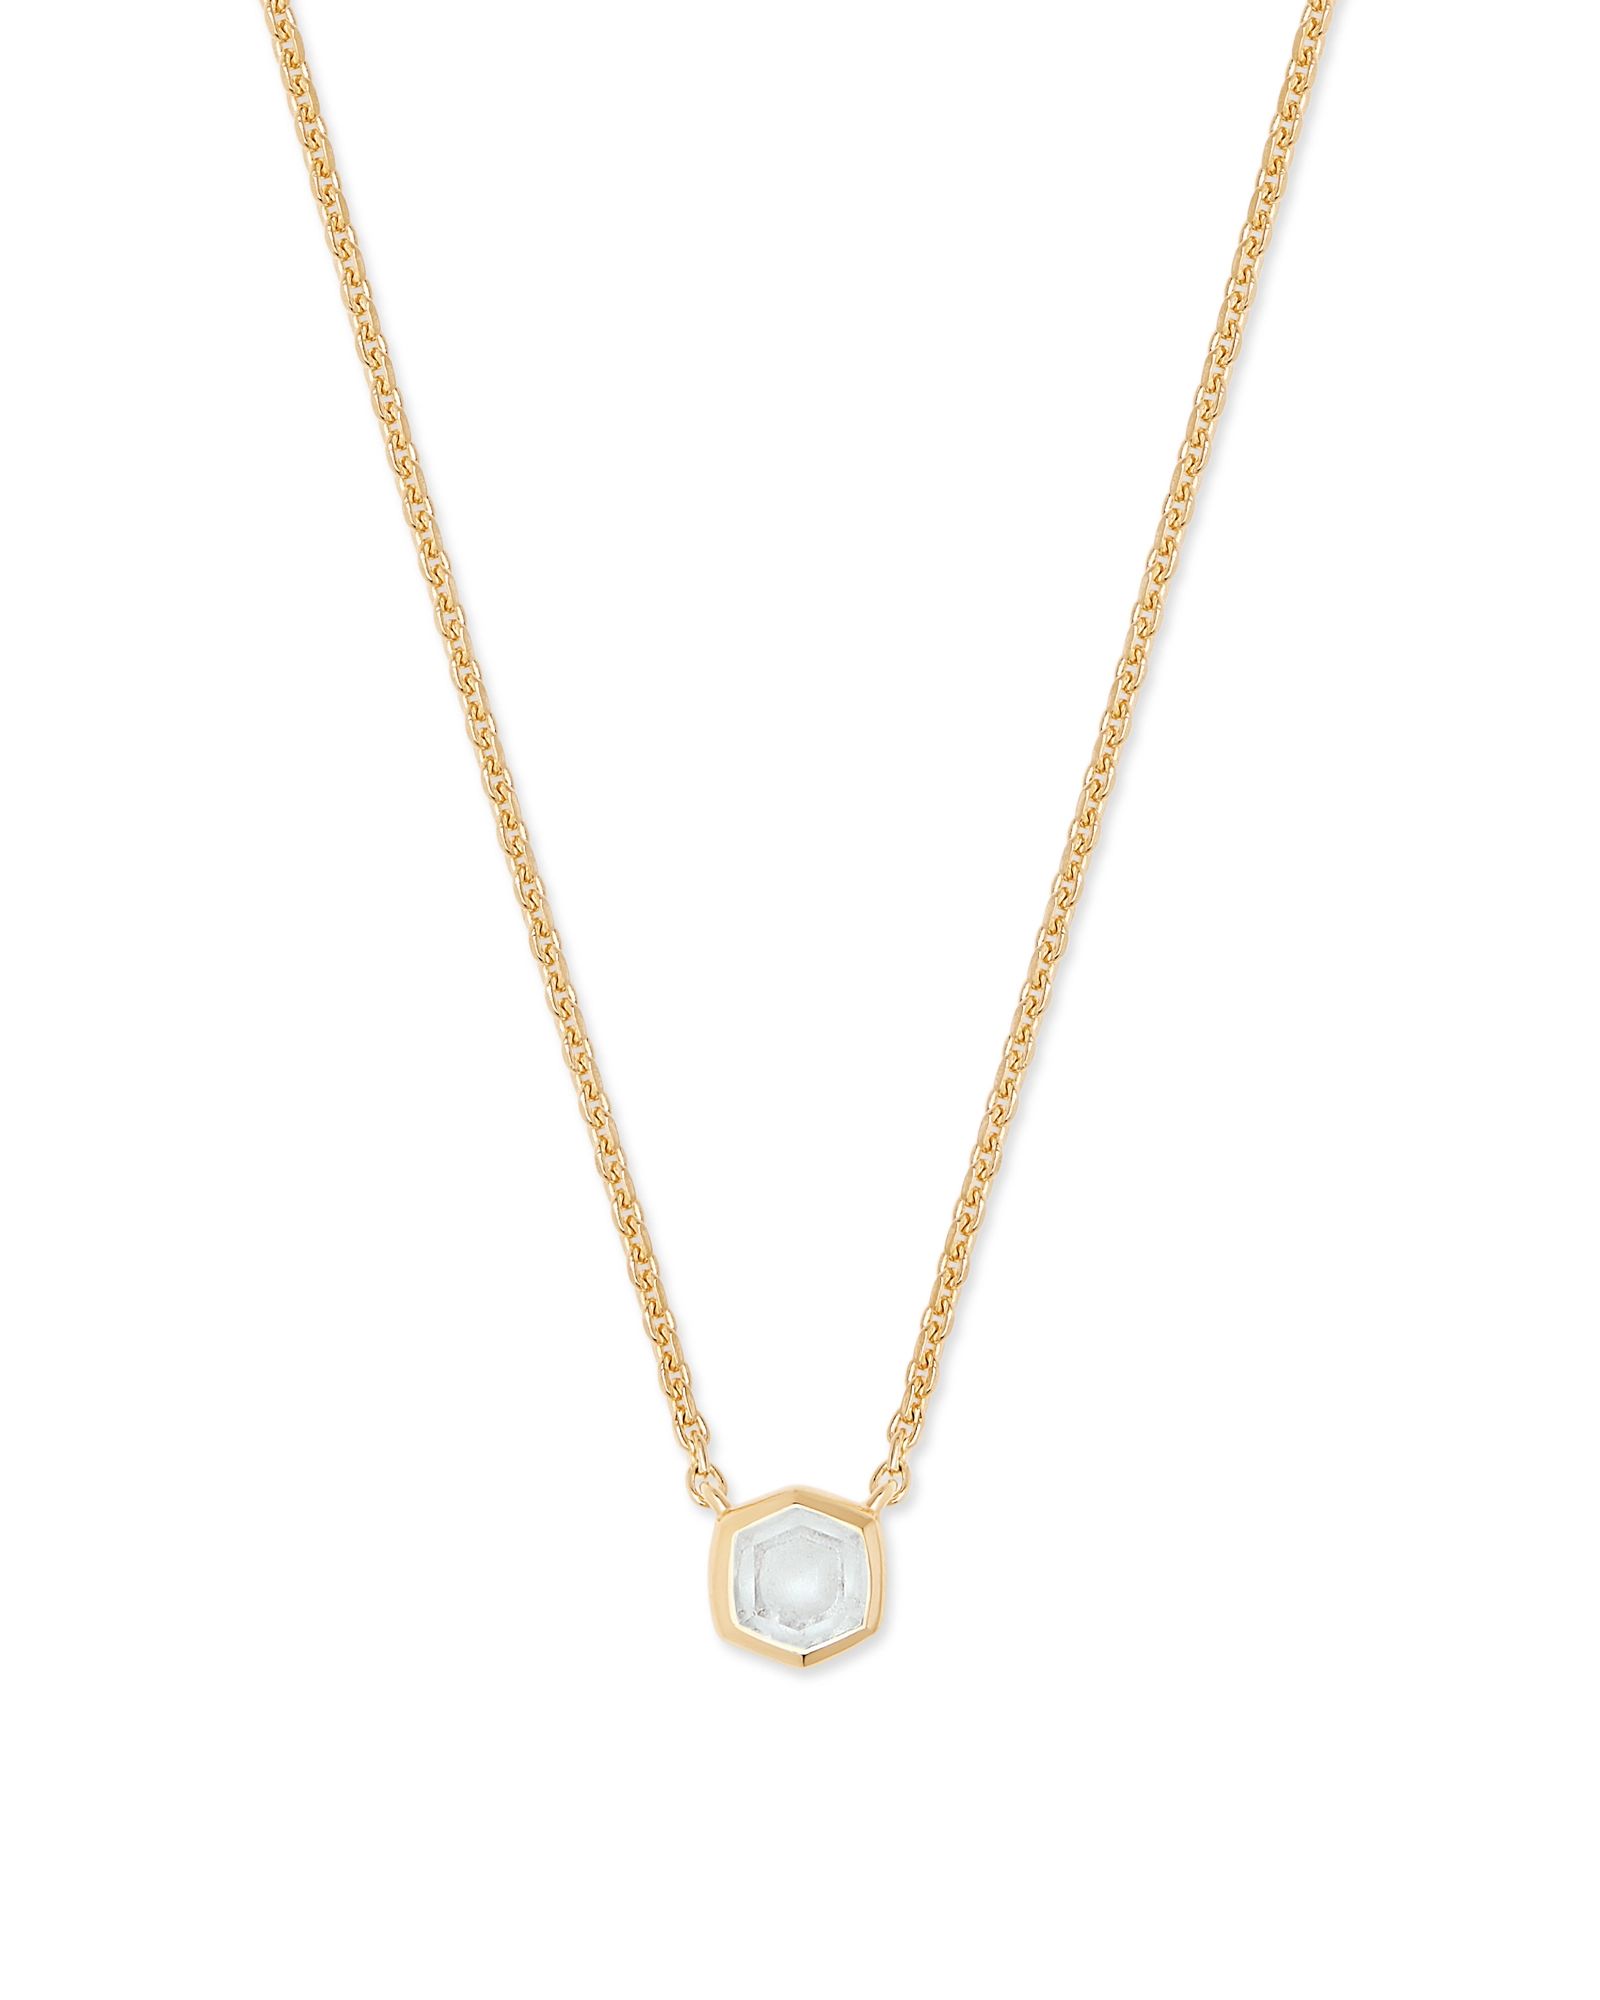 Davie 18K Gold Vermeil Pendant Necklace in Rock Crystal | Kendra Scott | Kendra Scott